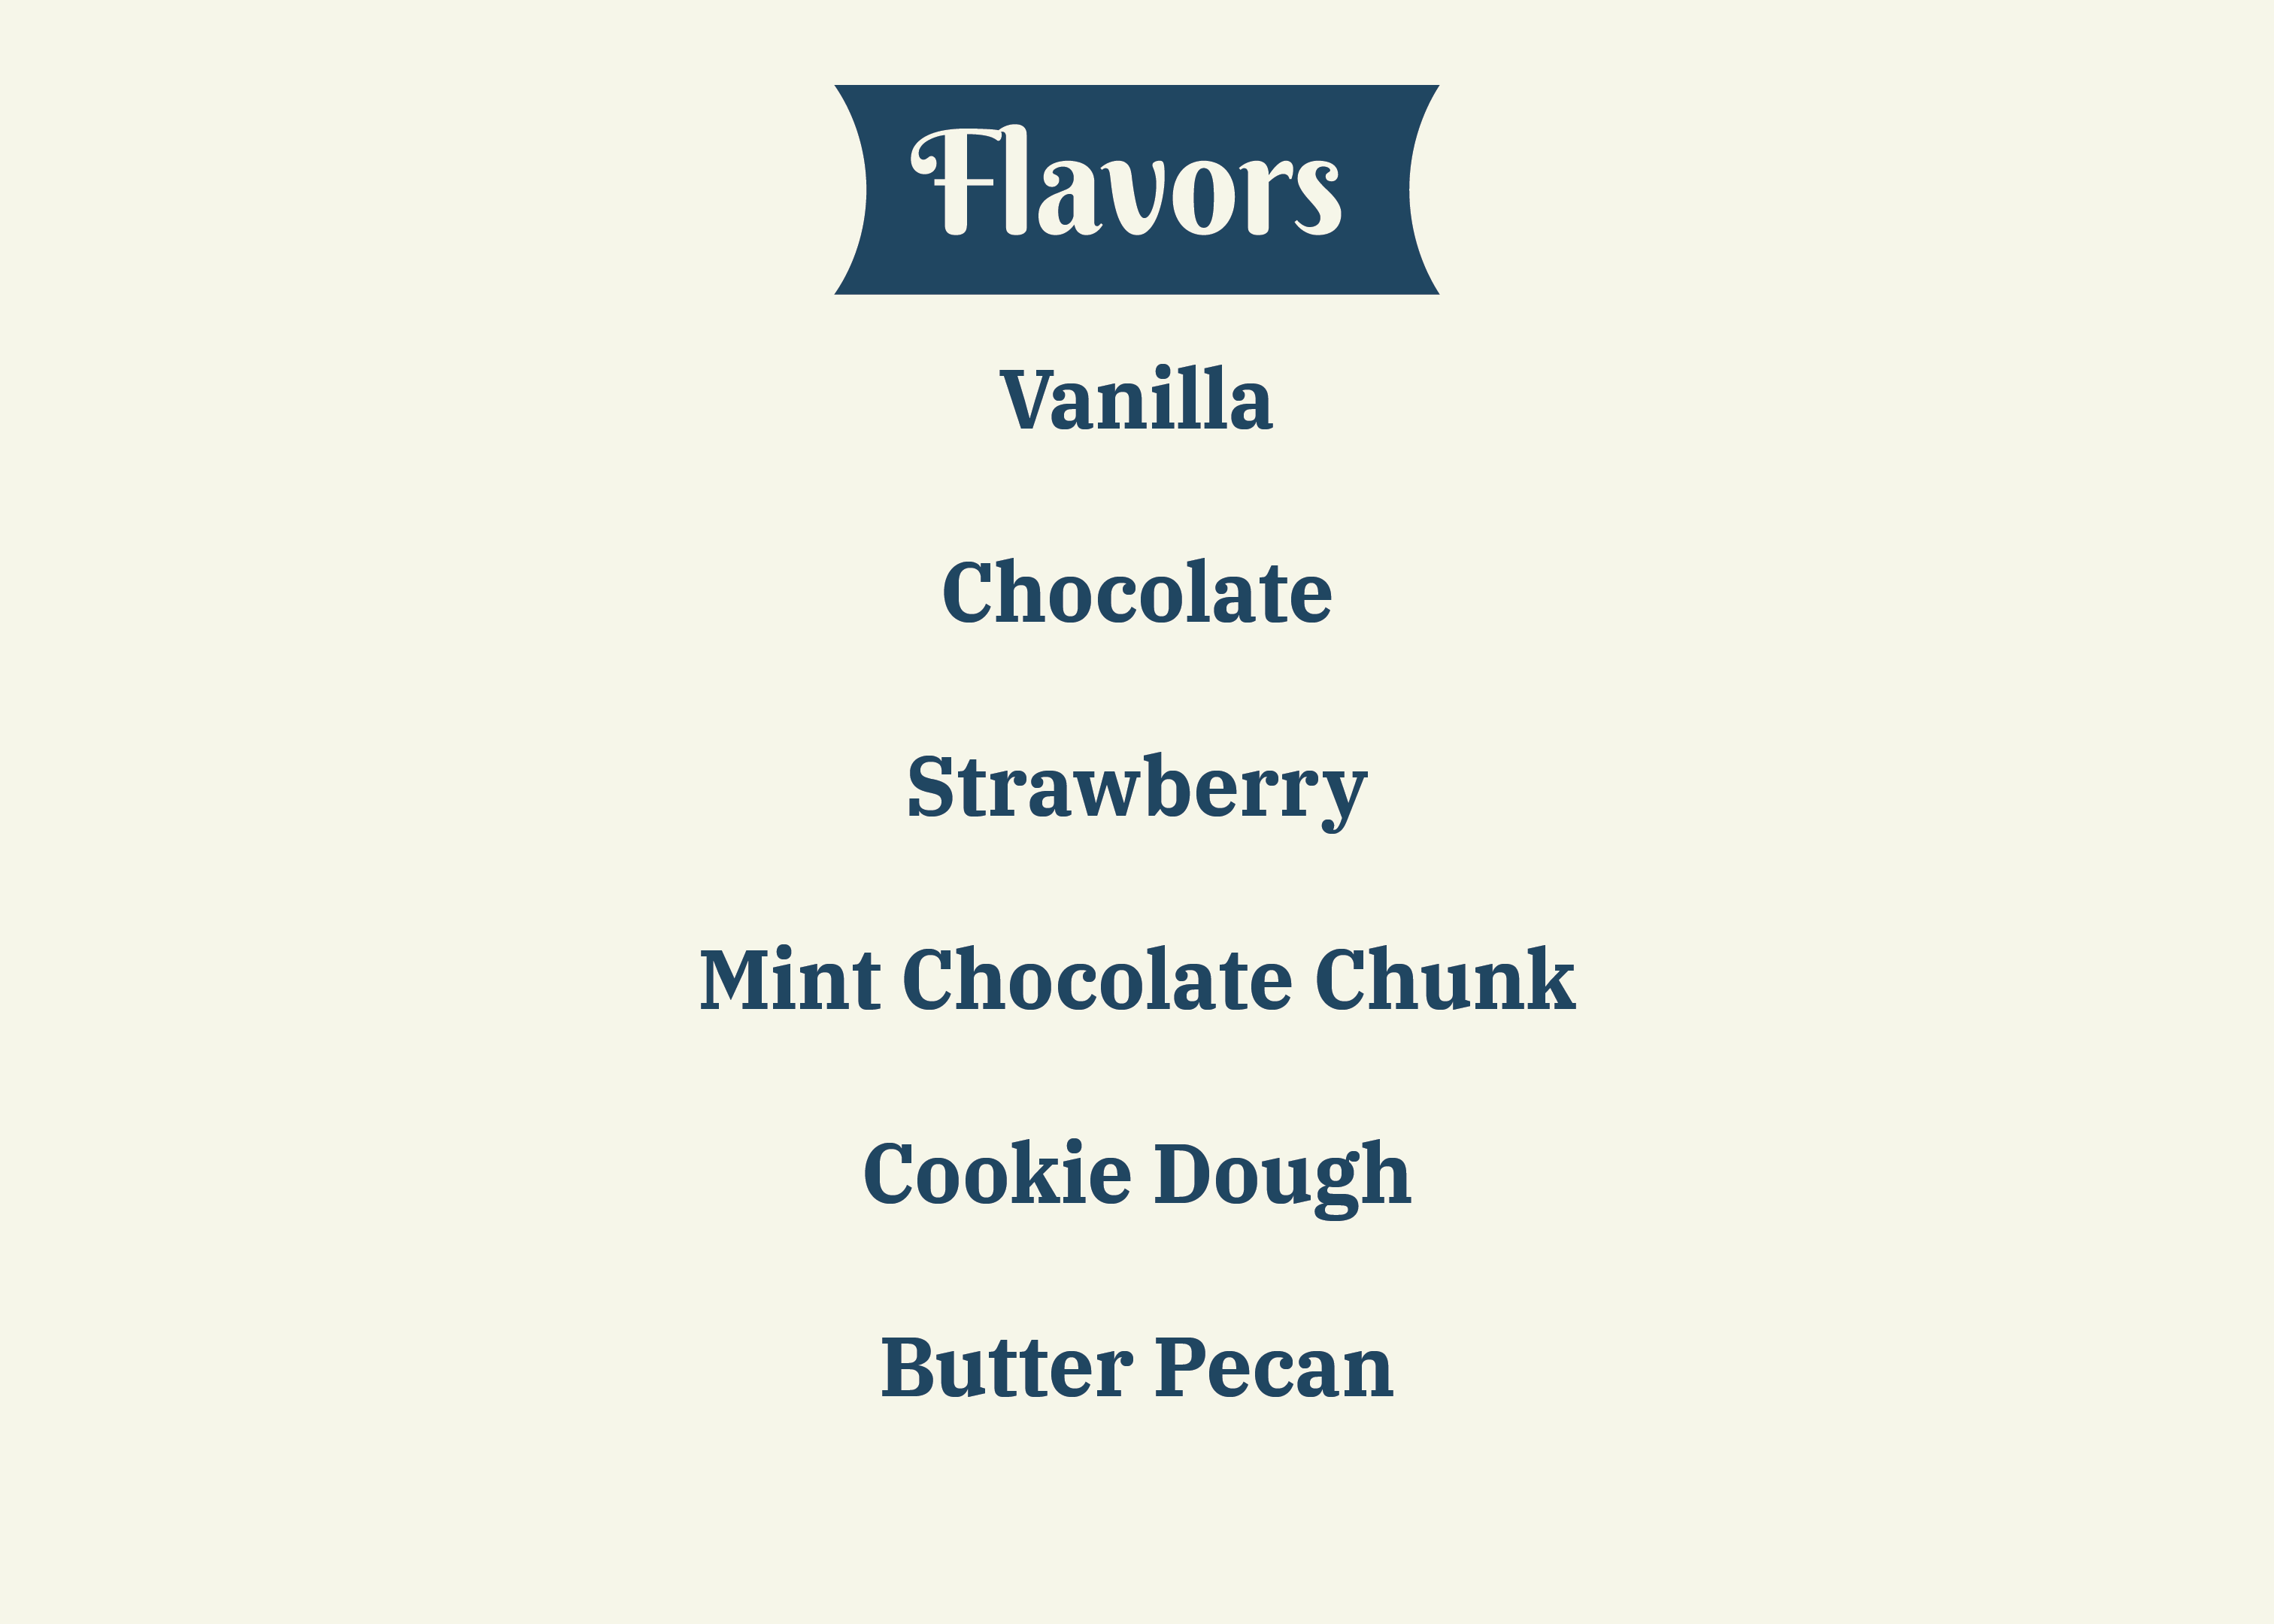 Flavors - Vanilla, Chocolate, Strawberry, Milk Chocolate Chunk, Cookie Dough, Butter Pecan